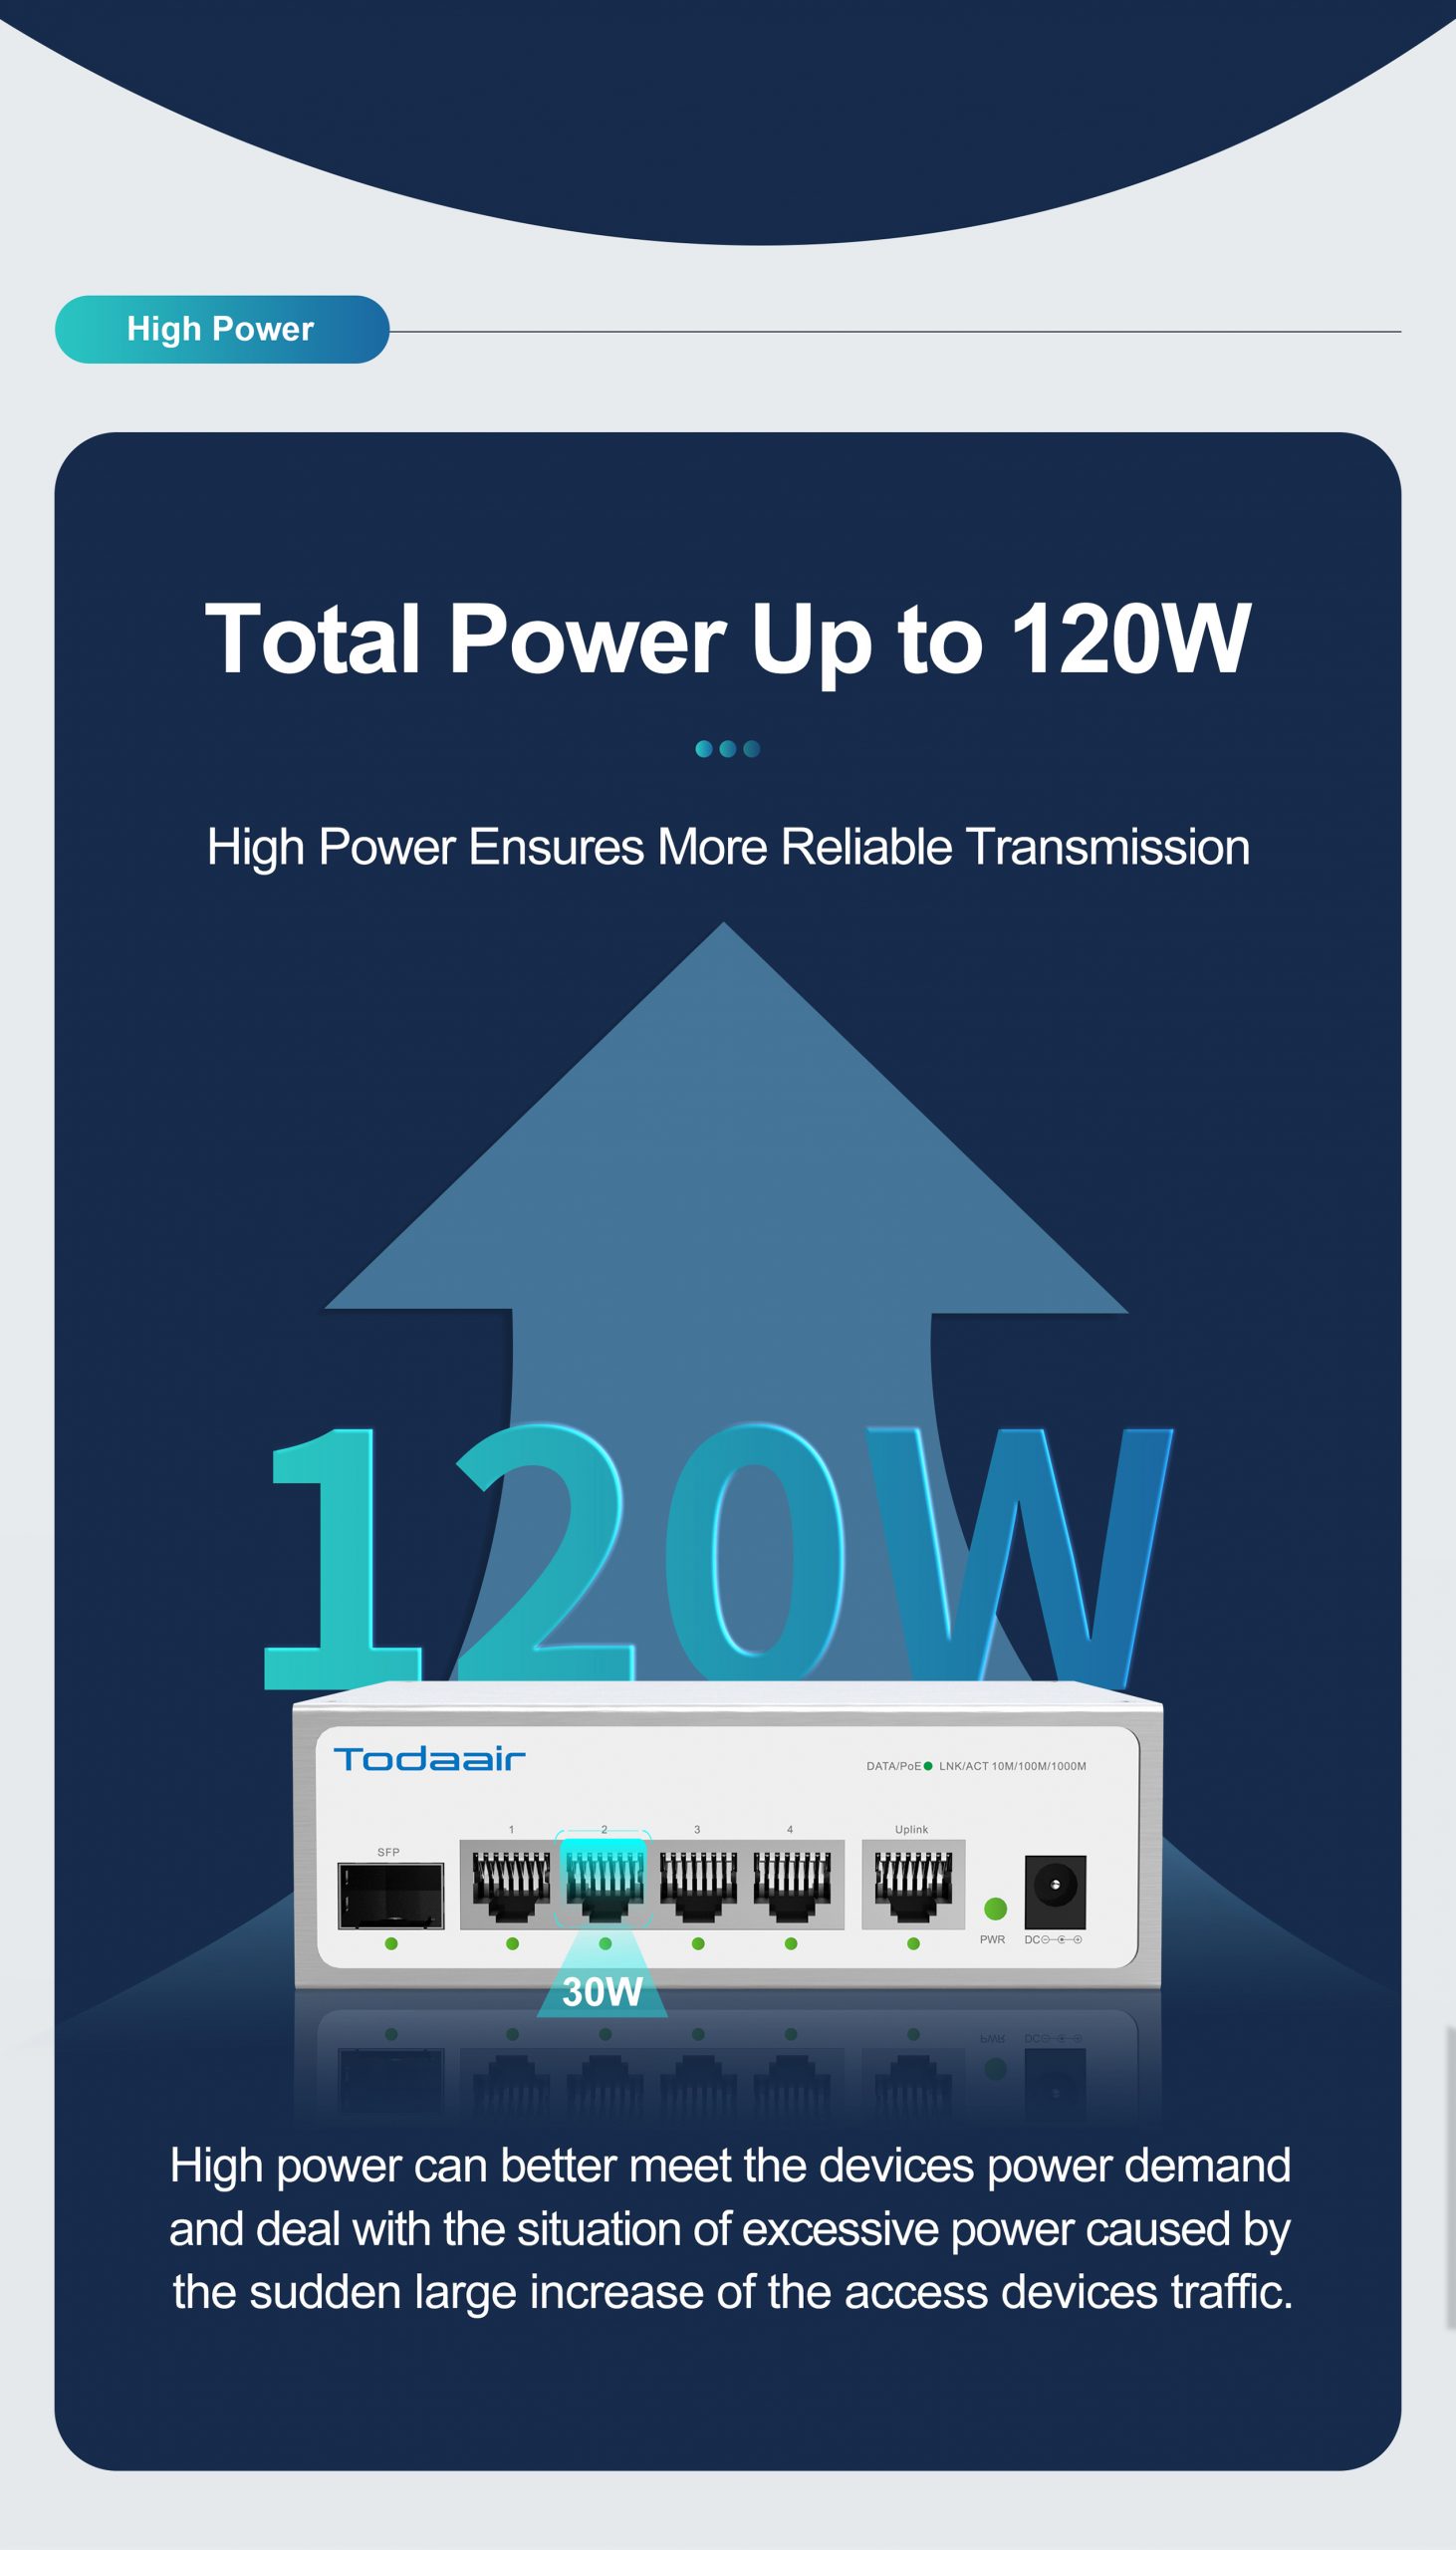 Todaair high power 120W network switch